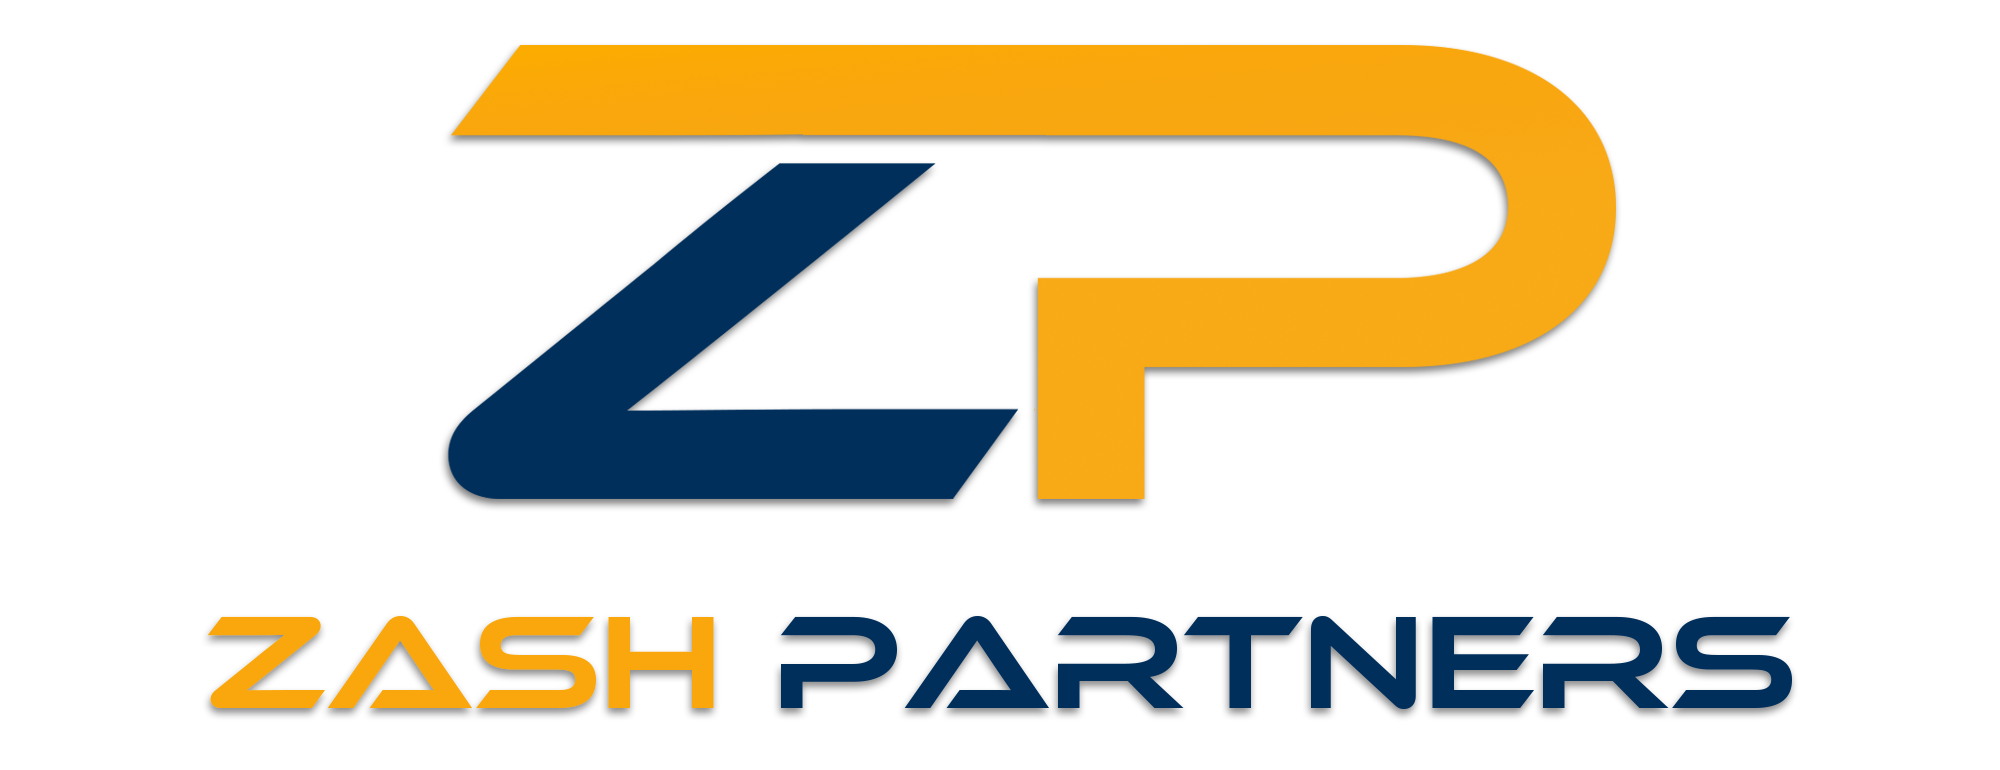 ZASH Partners